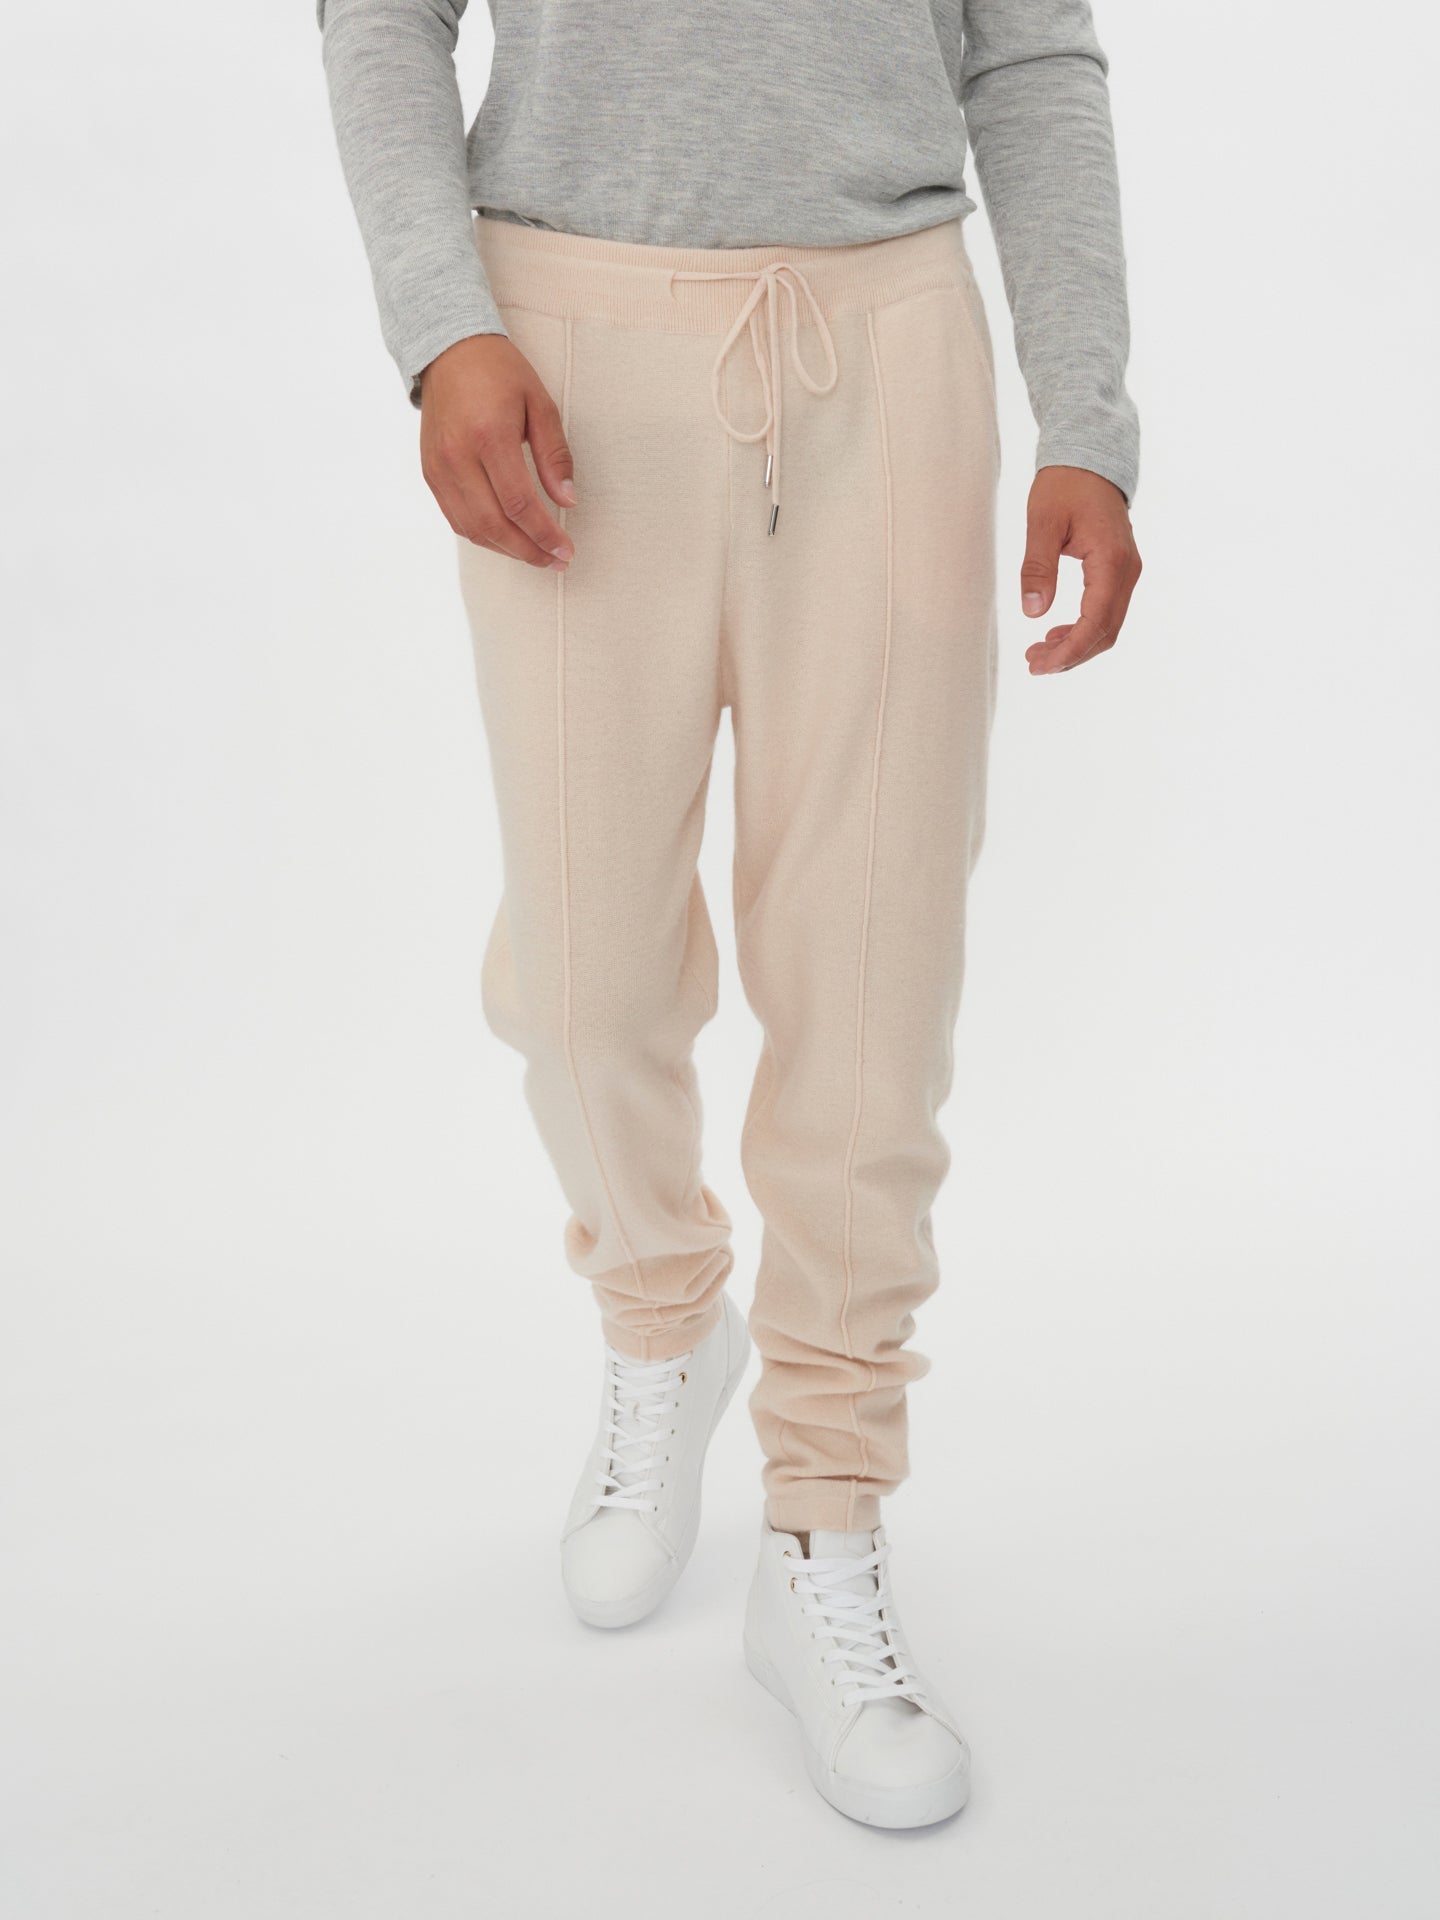 Men's Cashmere Joggers & Sweatpants | GOBI Cashmere